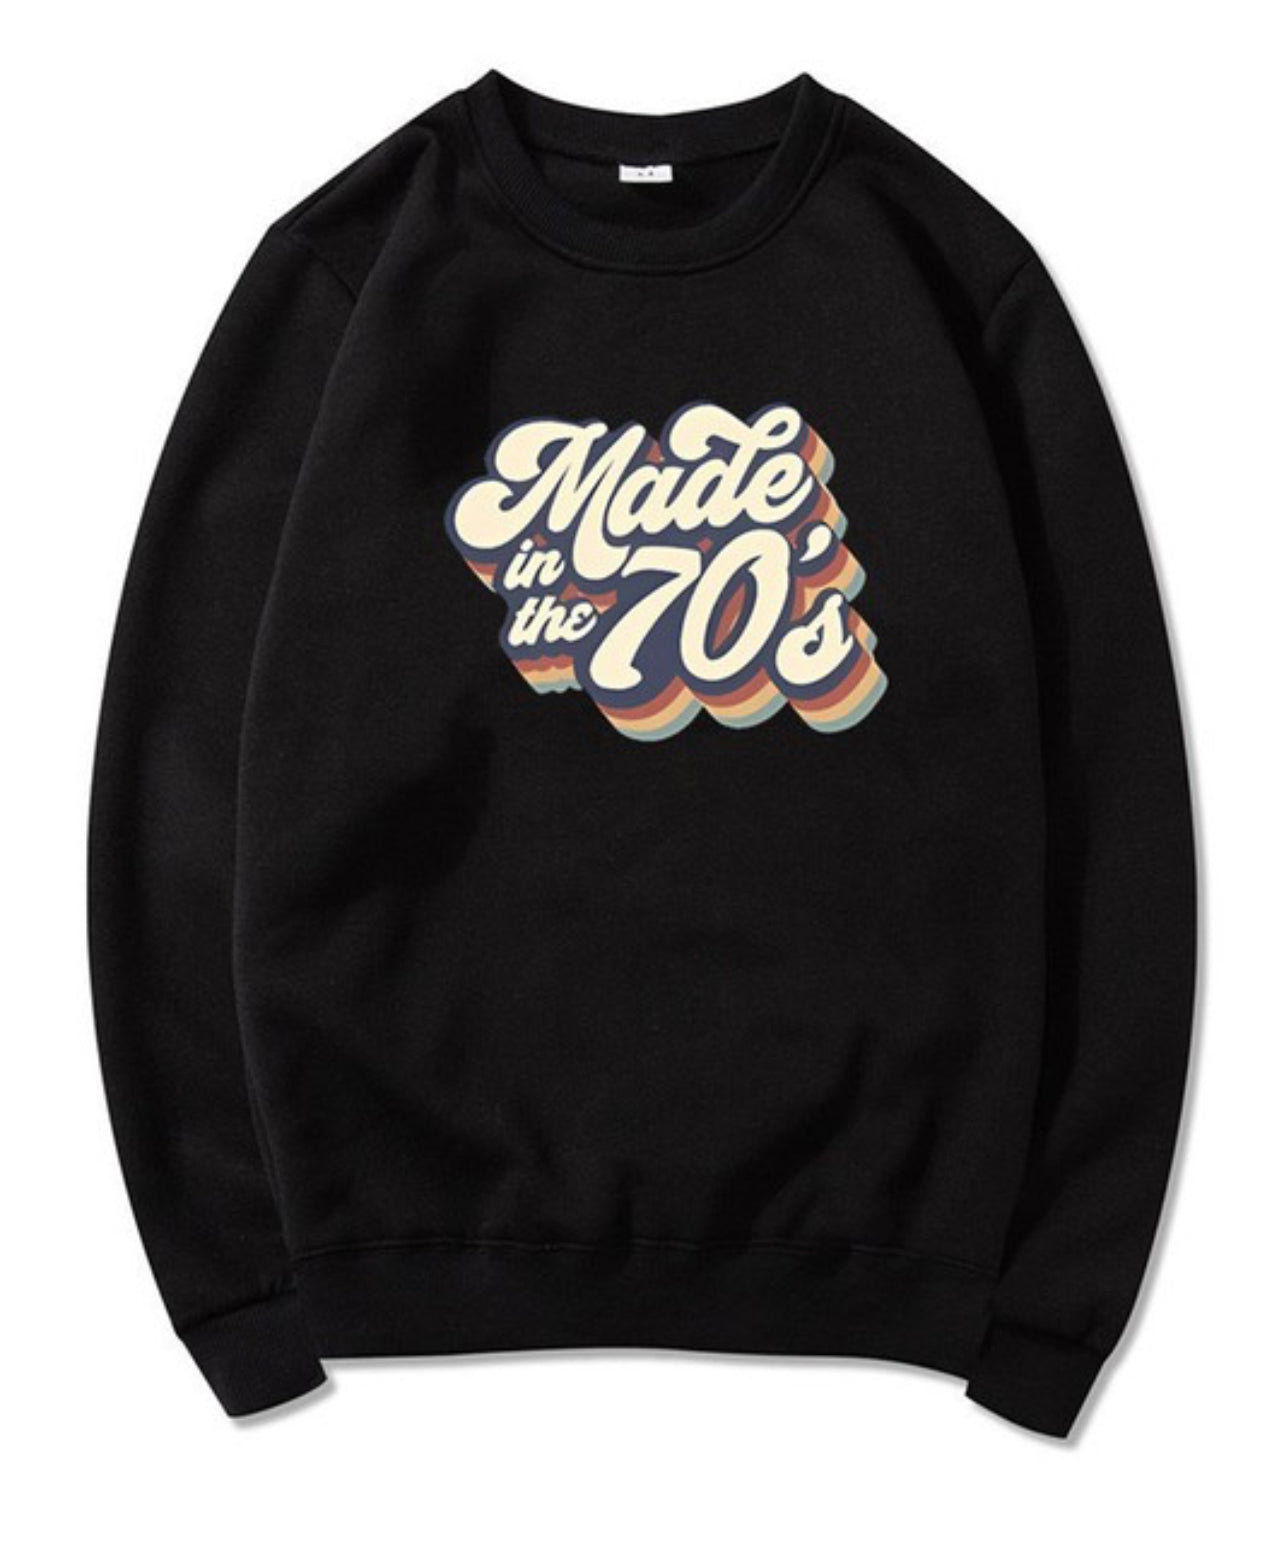 Made In The 70’s Black Sweatshirt